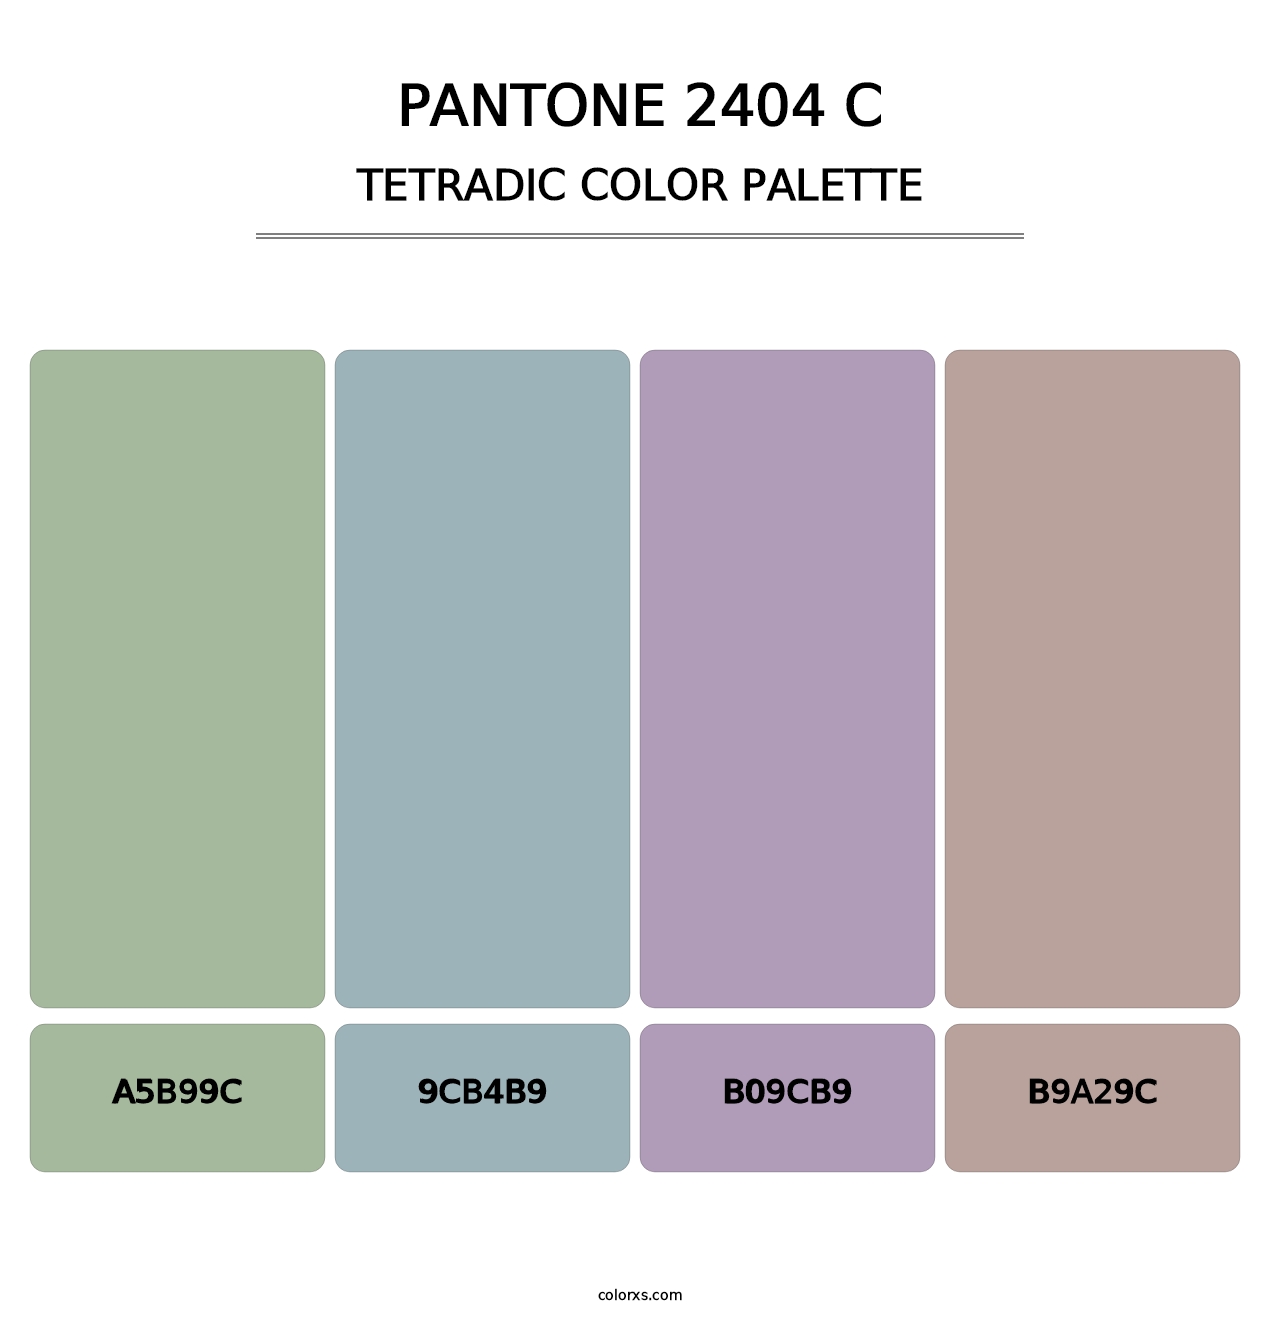 PANTONE 2404 C - Tetradic Color Palette